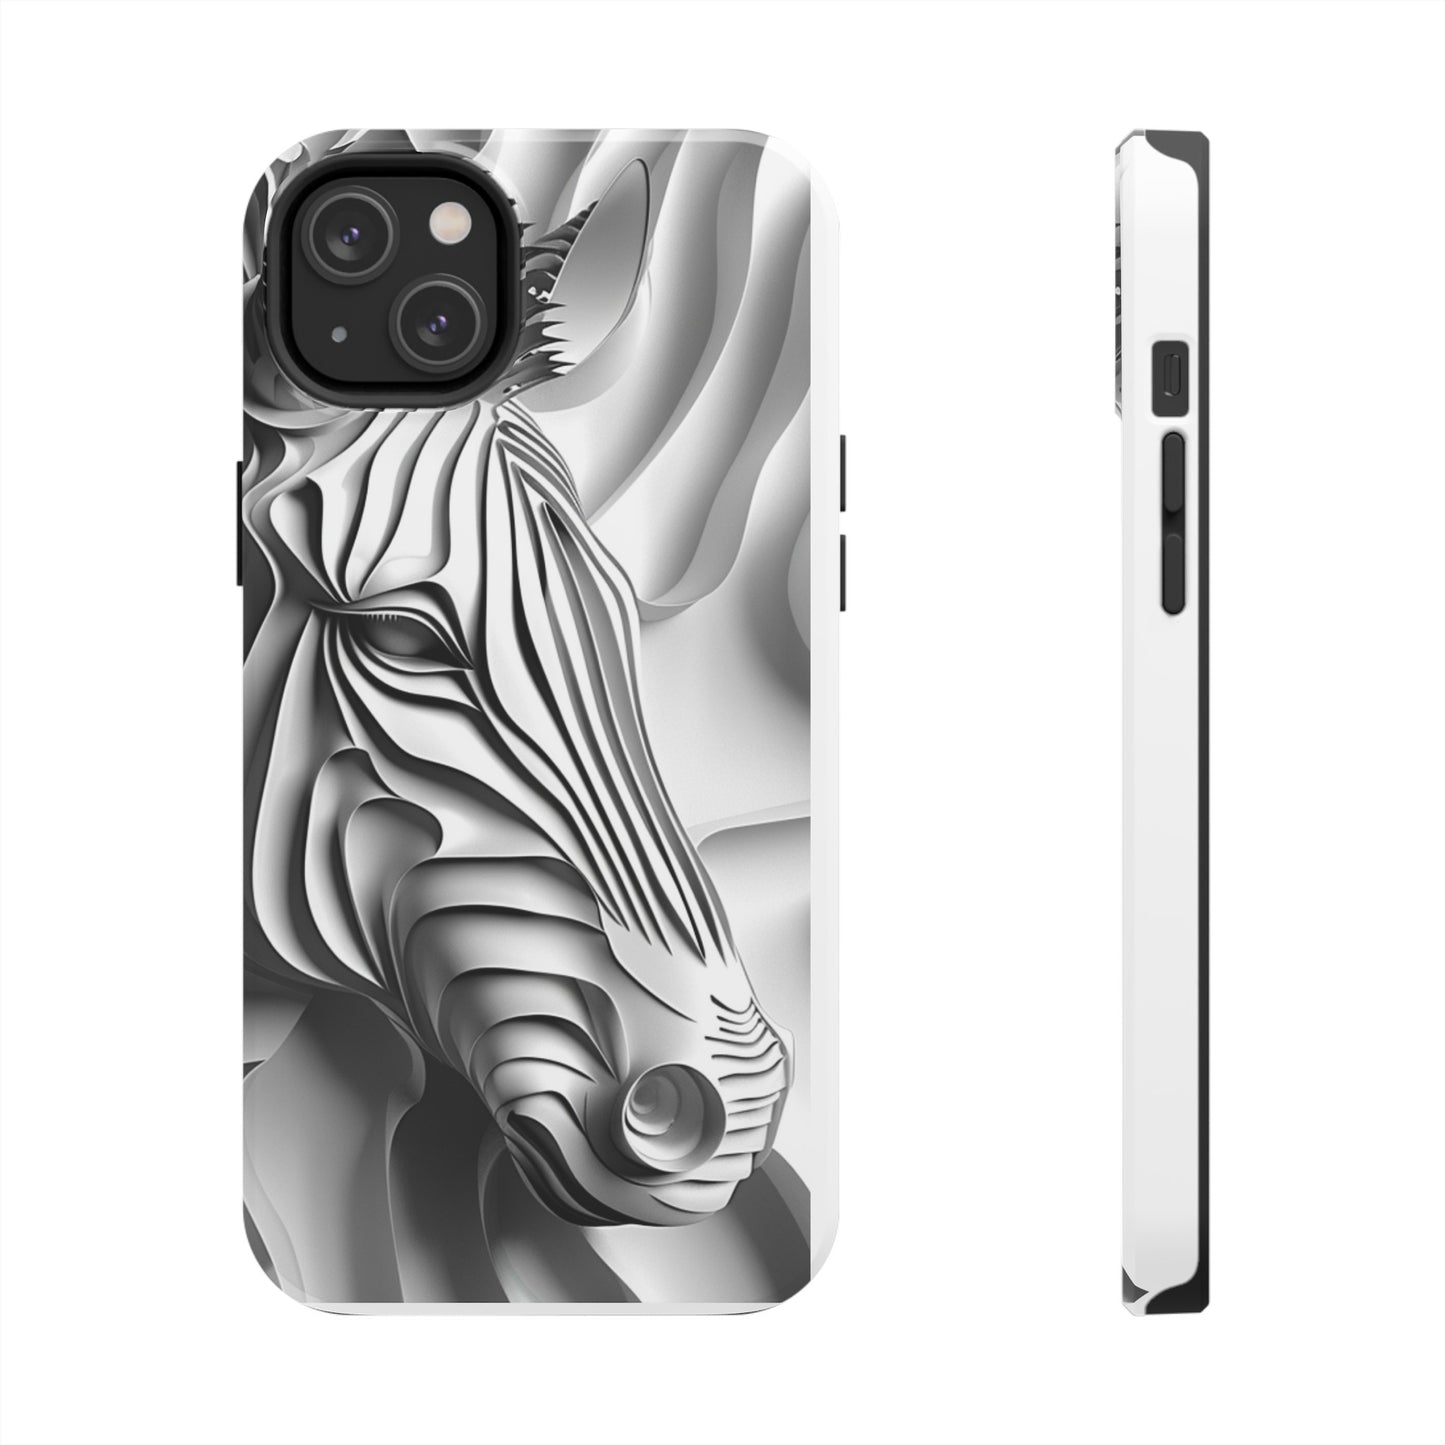 3D Sophisticated Featuring an Elegant Zebra Pattern in Monochrome"